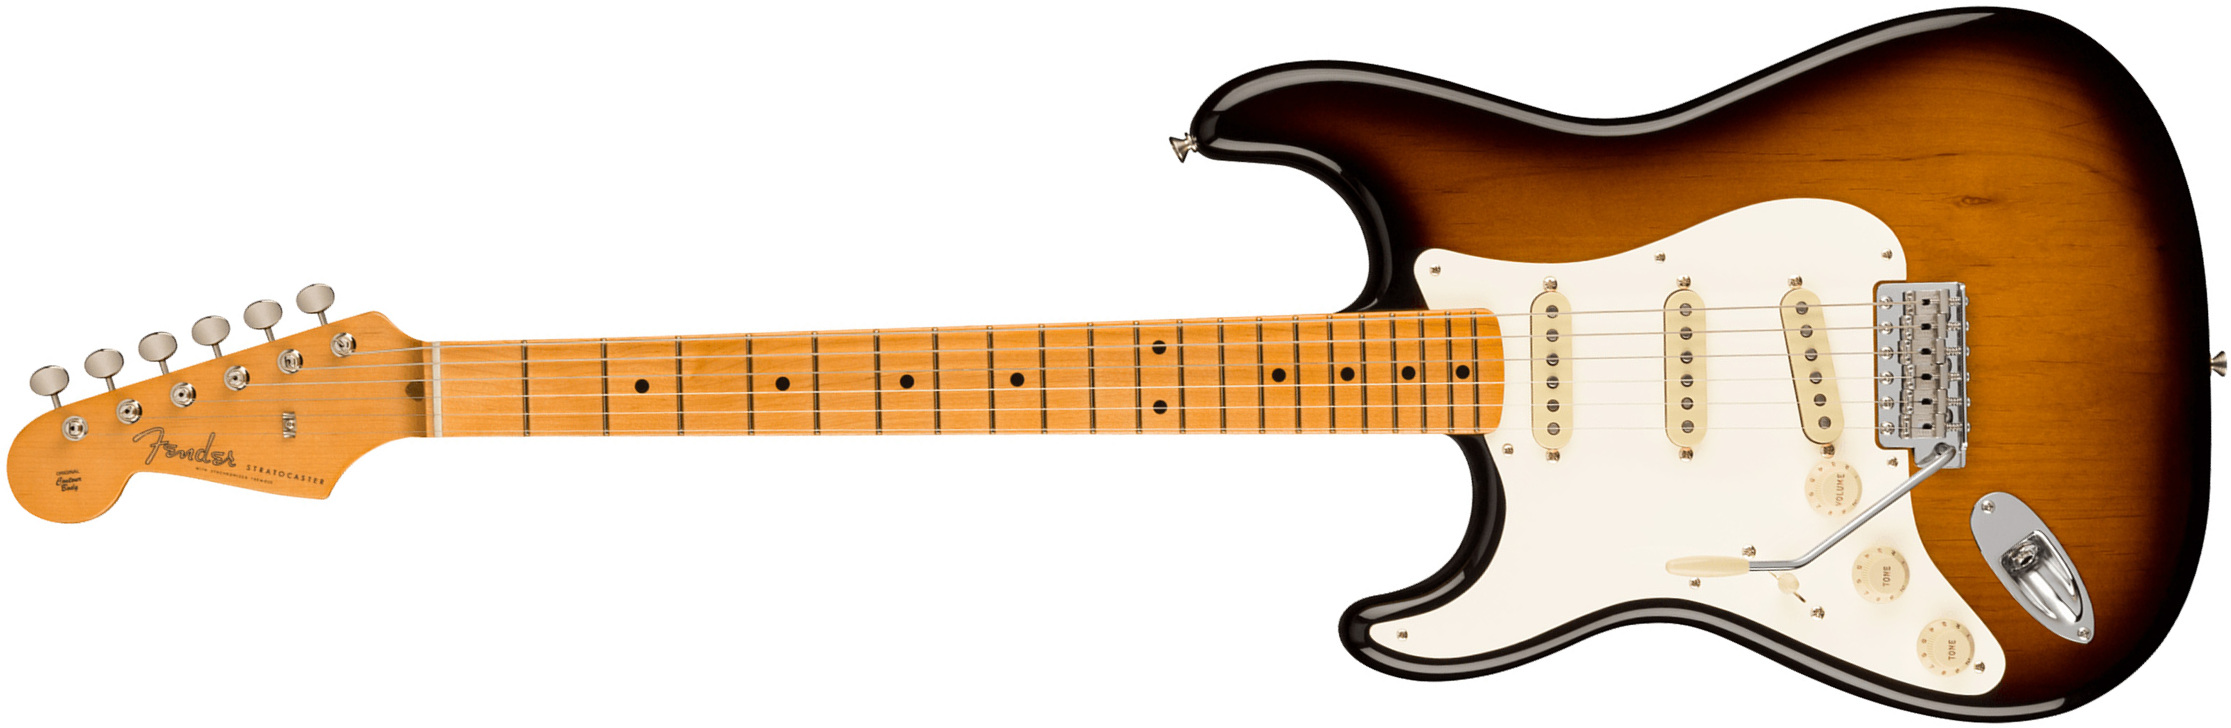 Fender Strat 1957 American Vintage Ii Lh Gaucher Usa 3s Trem Mn - 2-color Sunburst - Left-handed electric guitar - Main picture